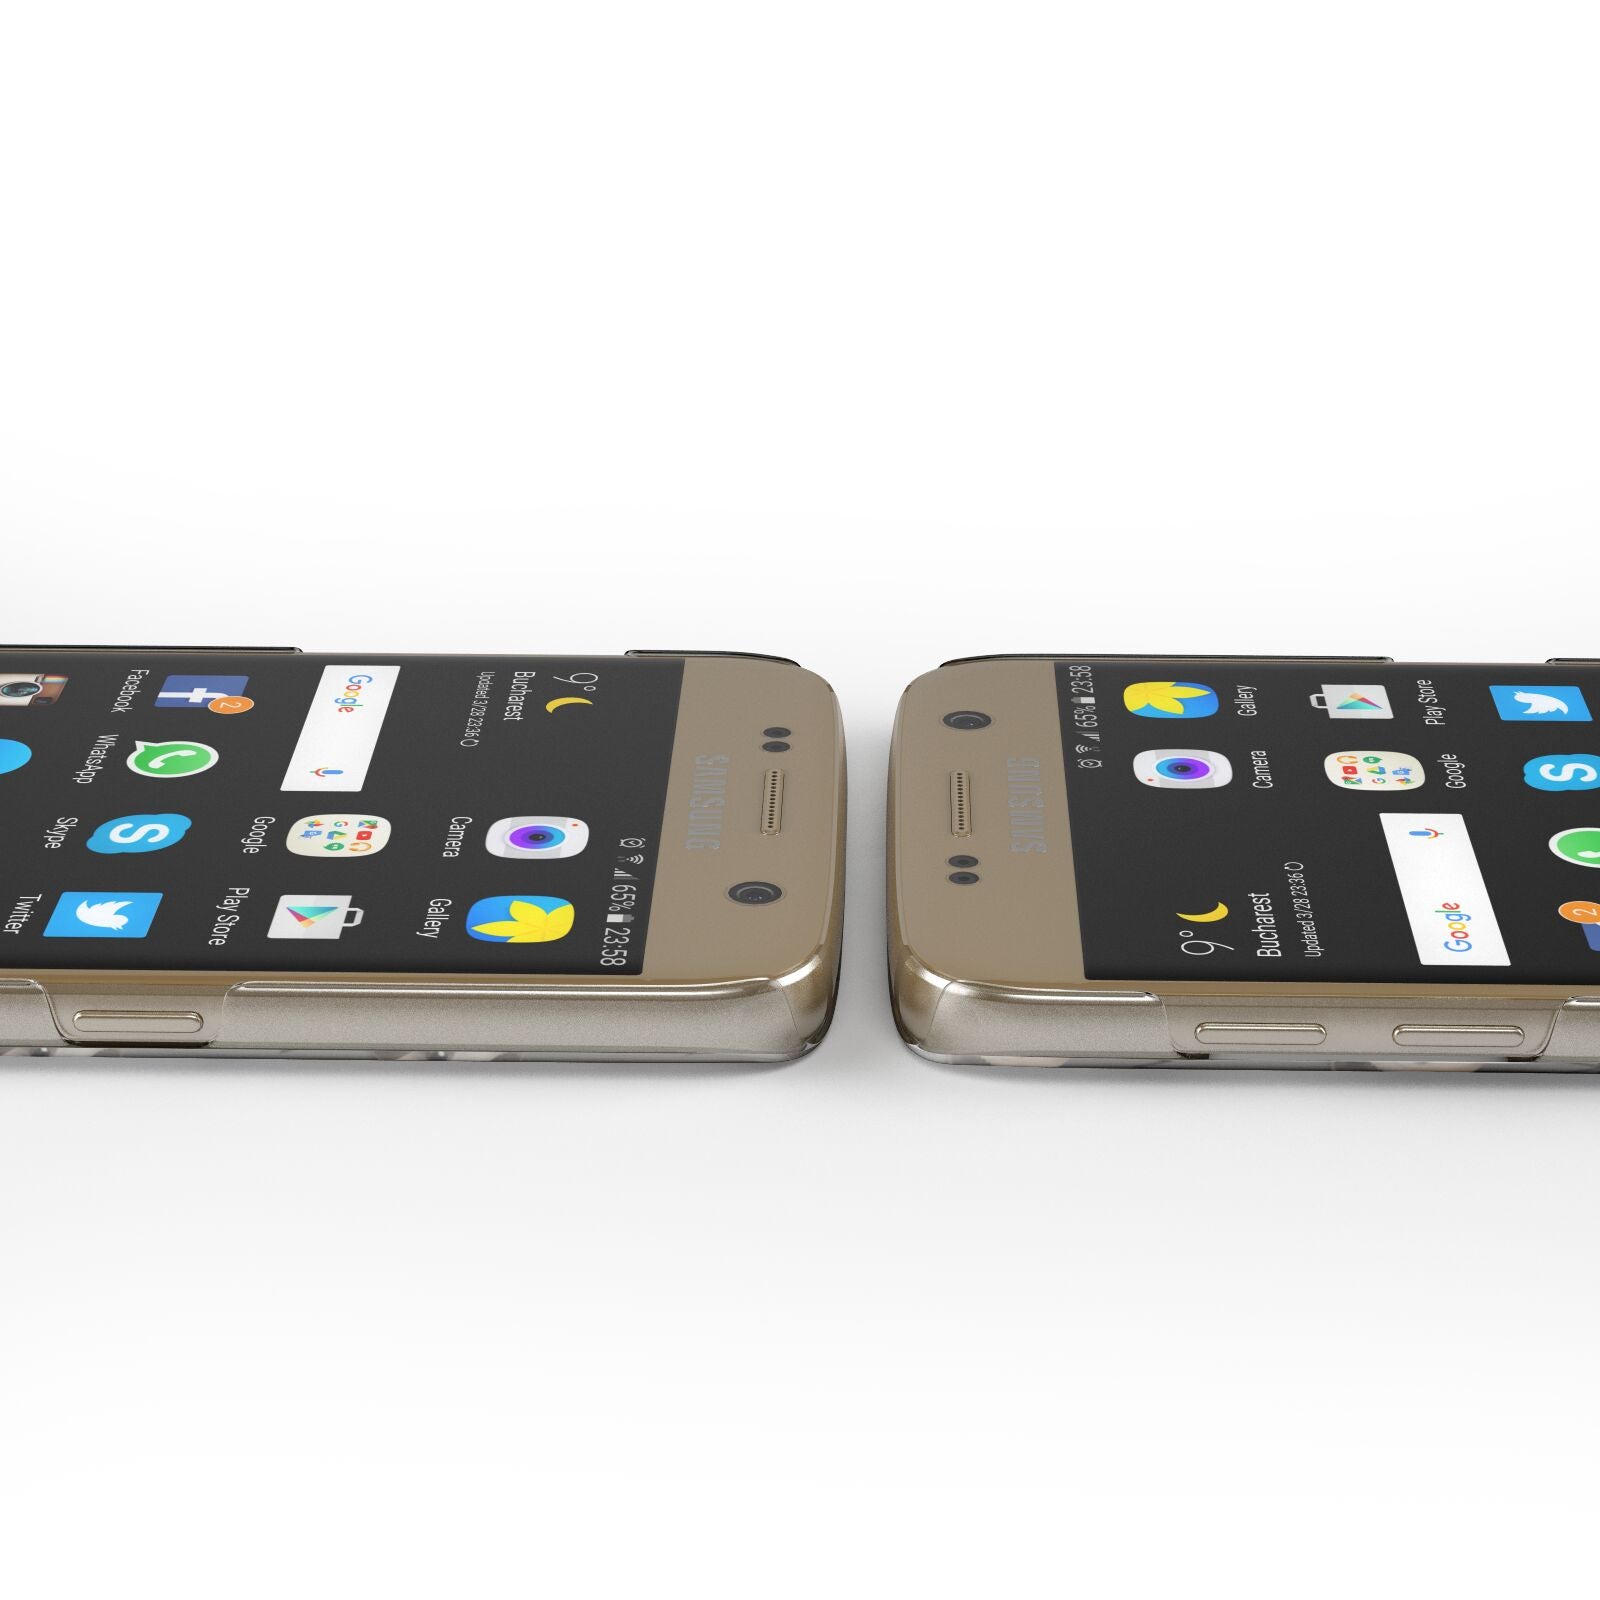 Chug Icon with Name Samsung Galaxy Case Ports Cutout